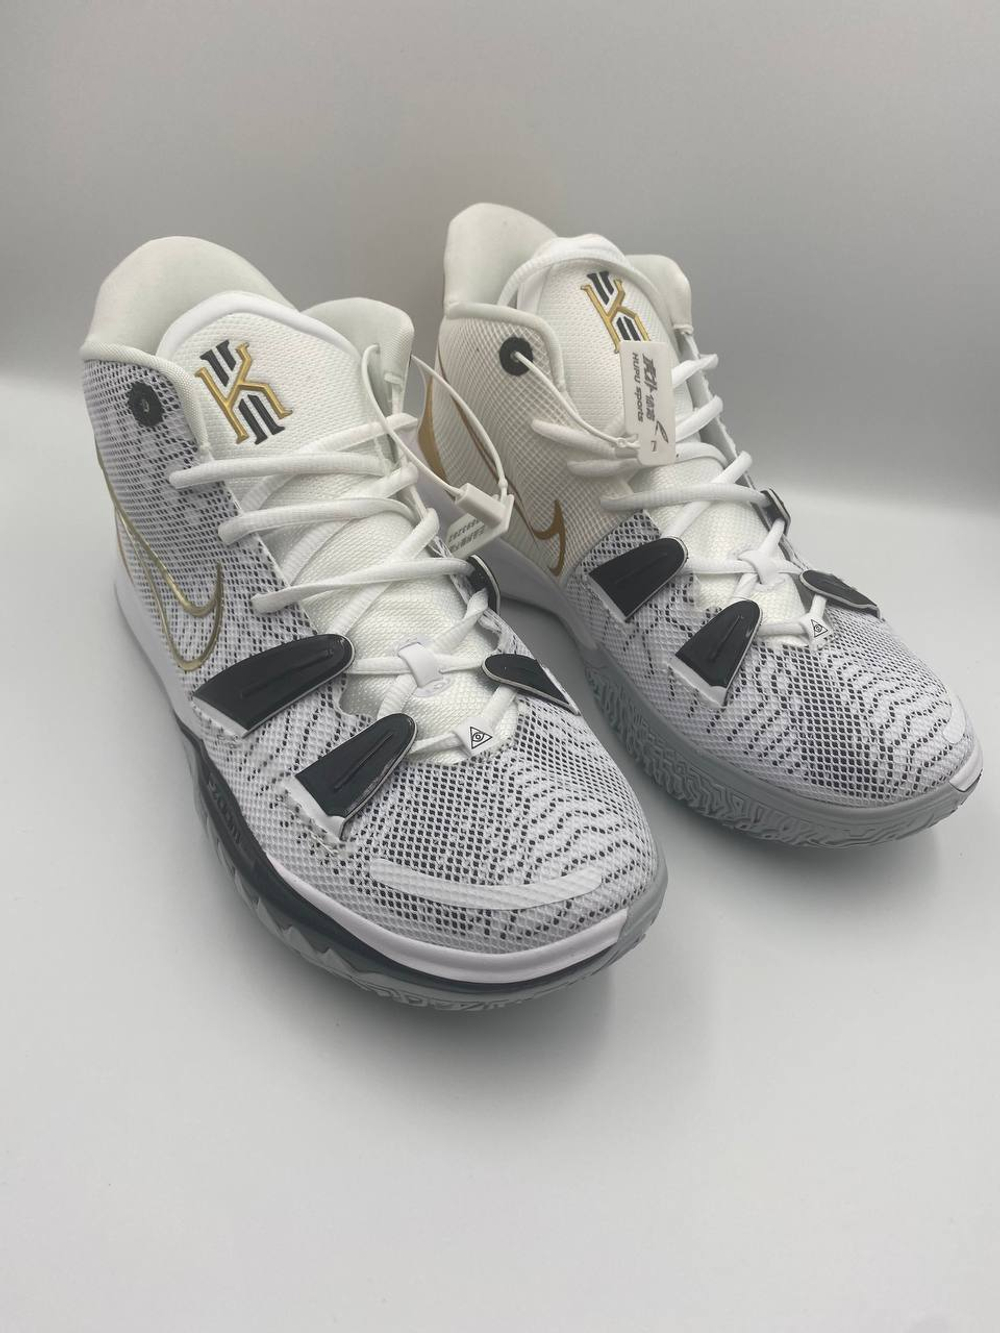 Nike Kyrie 7 White Black Gold